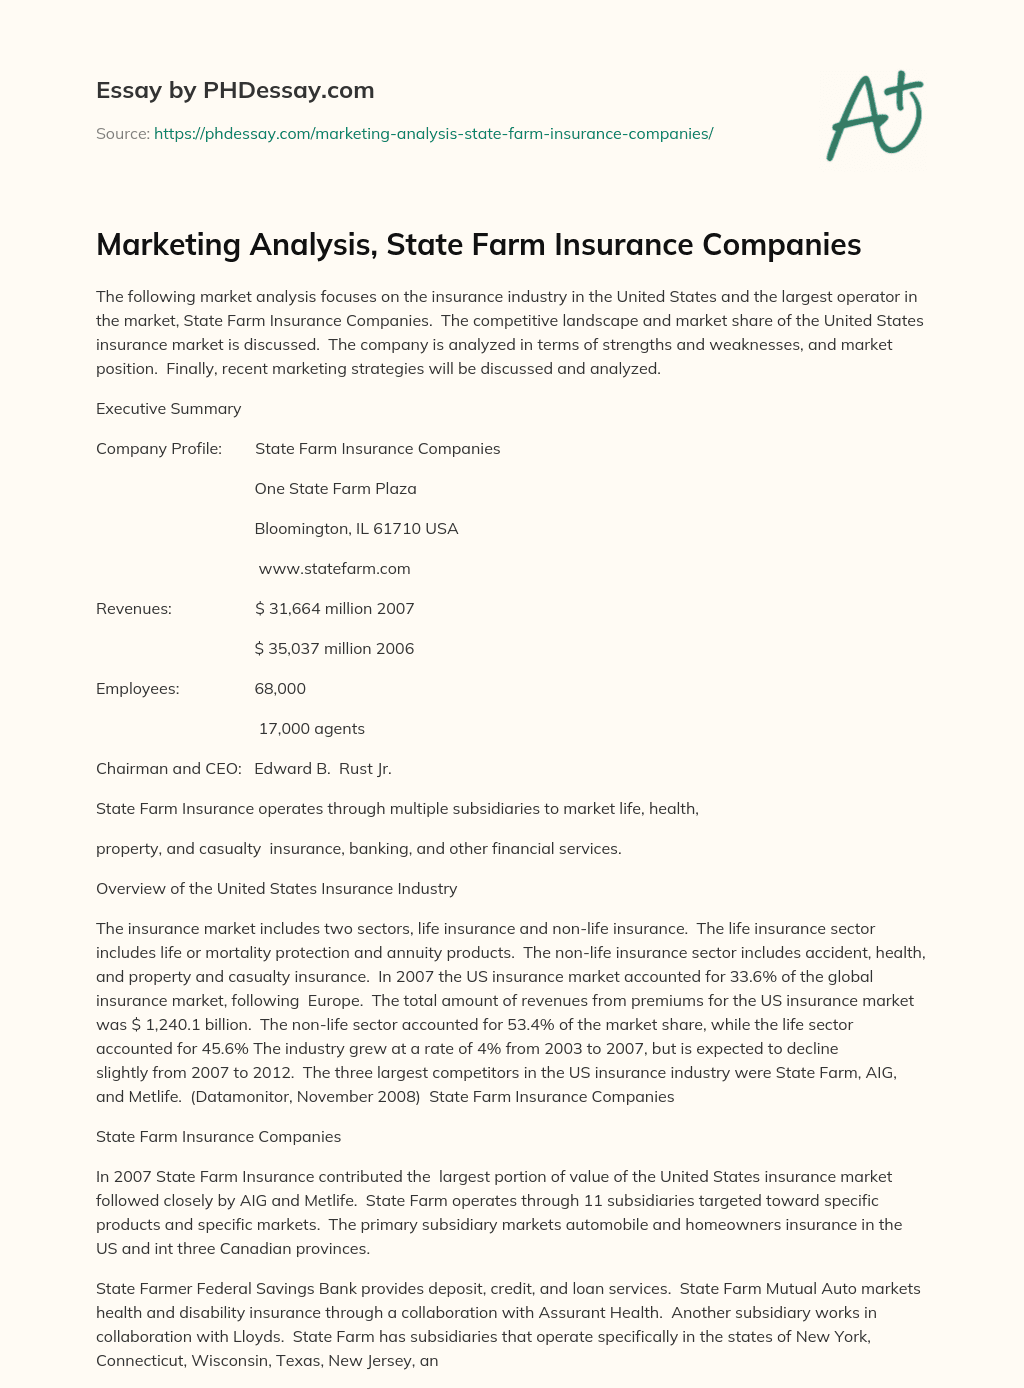 Marketing Analysis, State Farm Insurance Companies essay